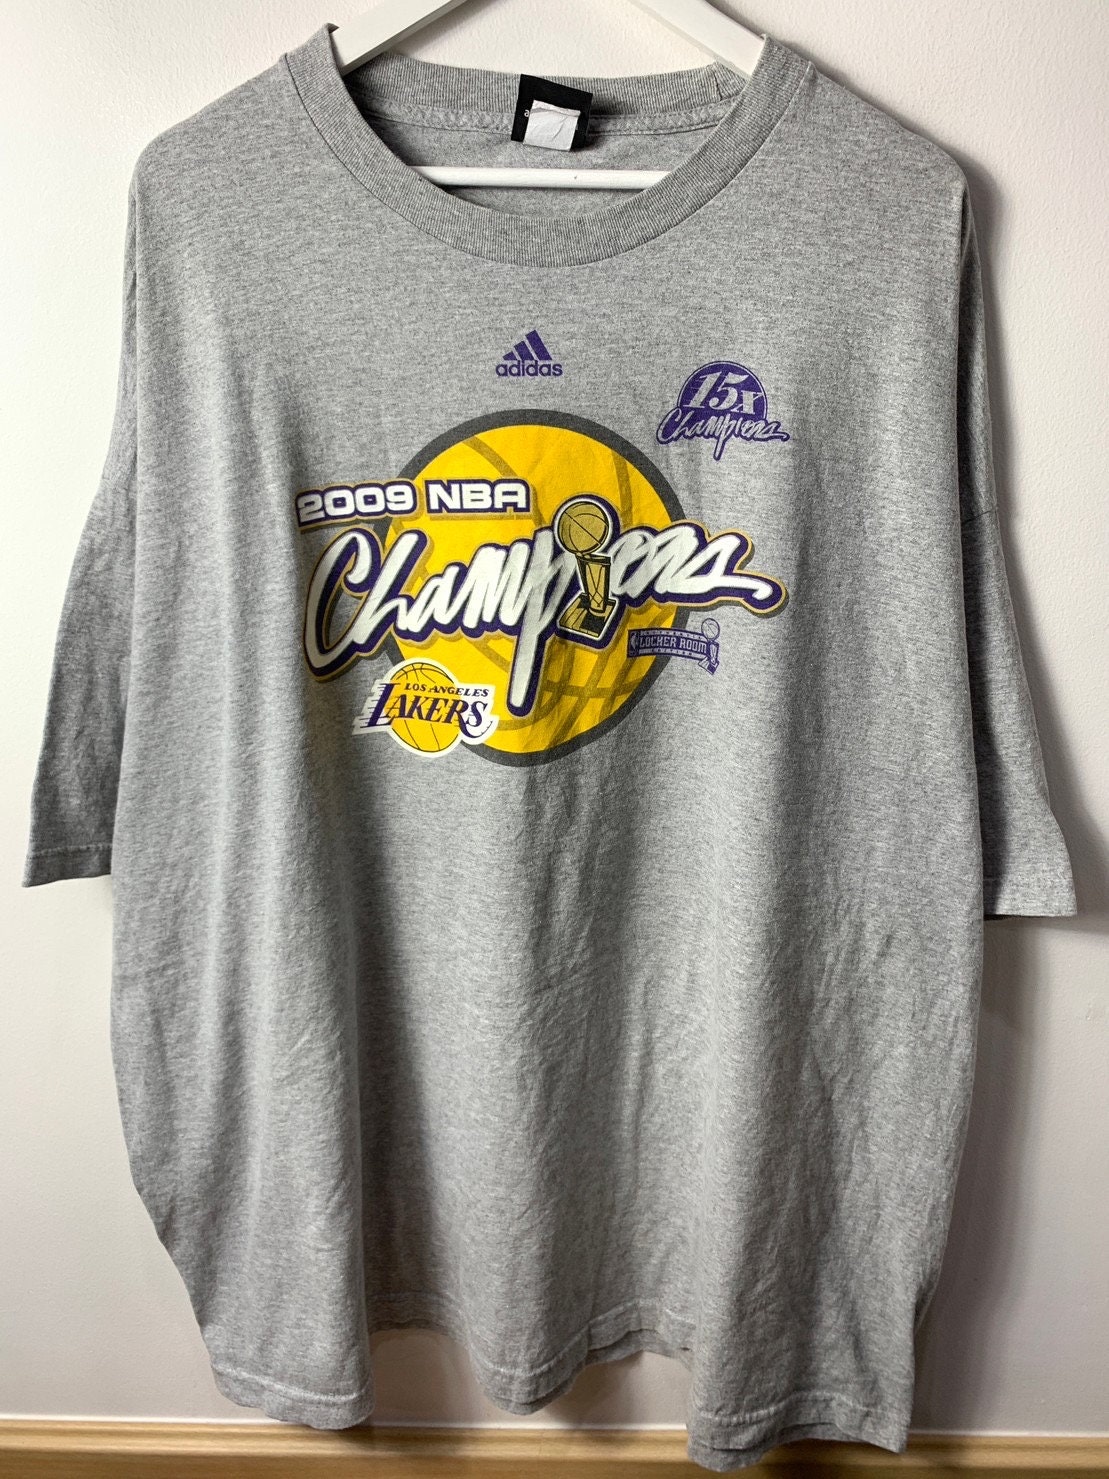 Adidas Los Angeles LA Lakers 2009 NBA Champions T-Shirt 3XL Locker